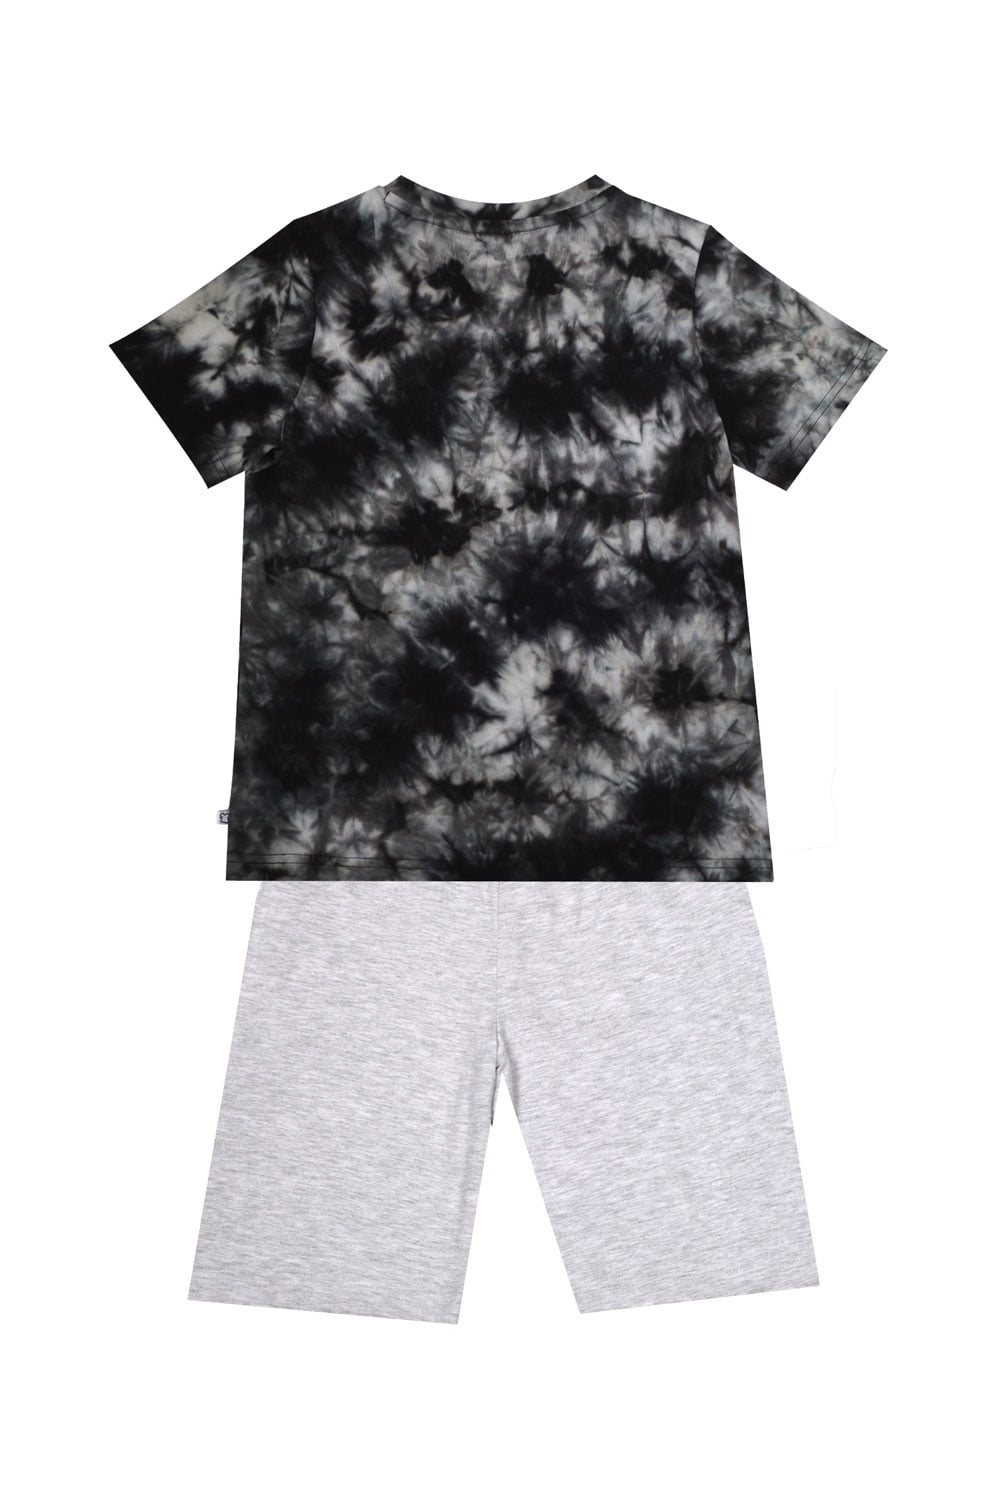 The Mandalorian Organic Cotton Shorty Pyjamas - Brand Threads